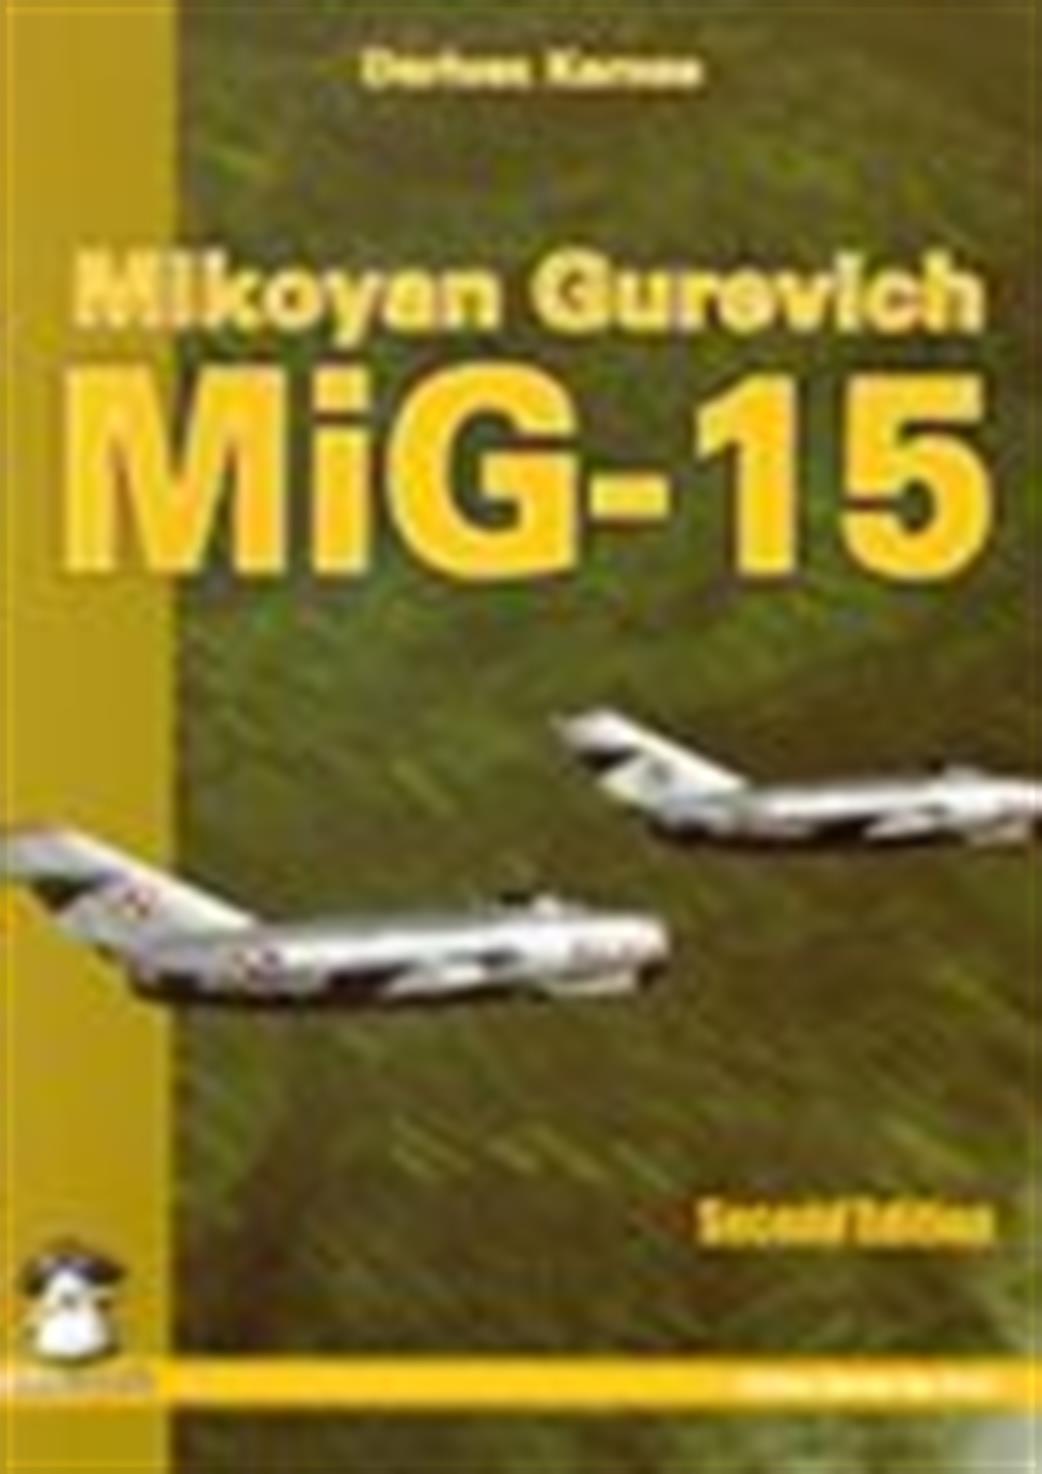 9788363678159 Mikoyan Gurevich Mig-15 by Dariusz Karnas